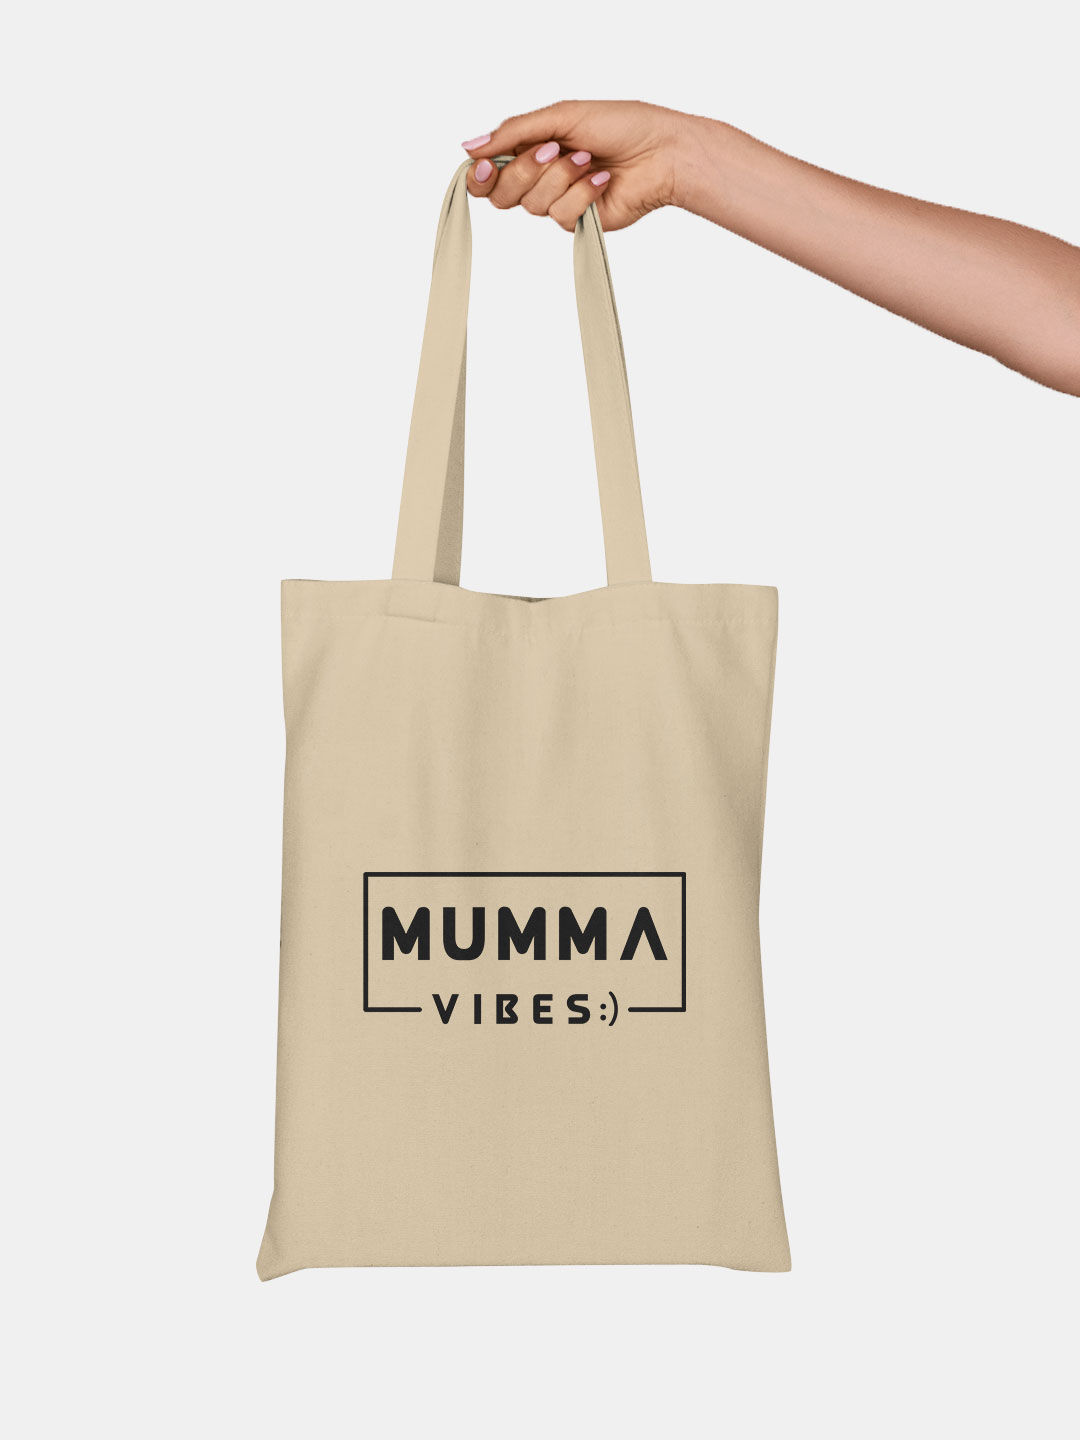 Buy Mumma Vibes - Tote Bags Tote Bags Online